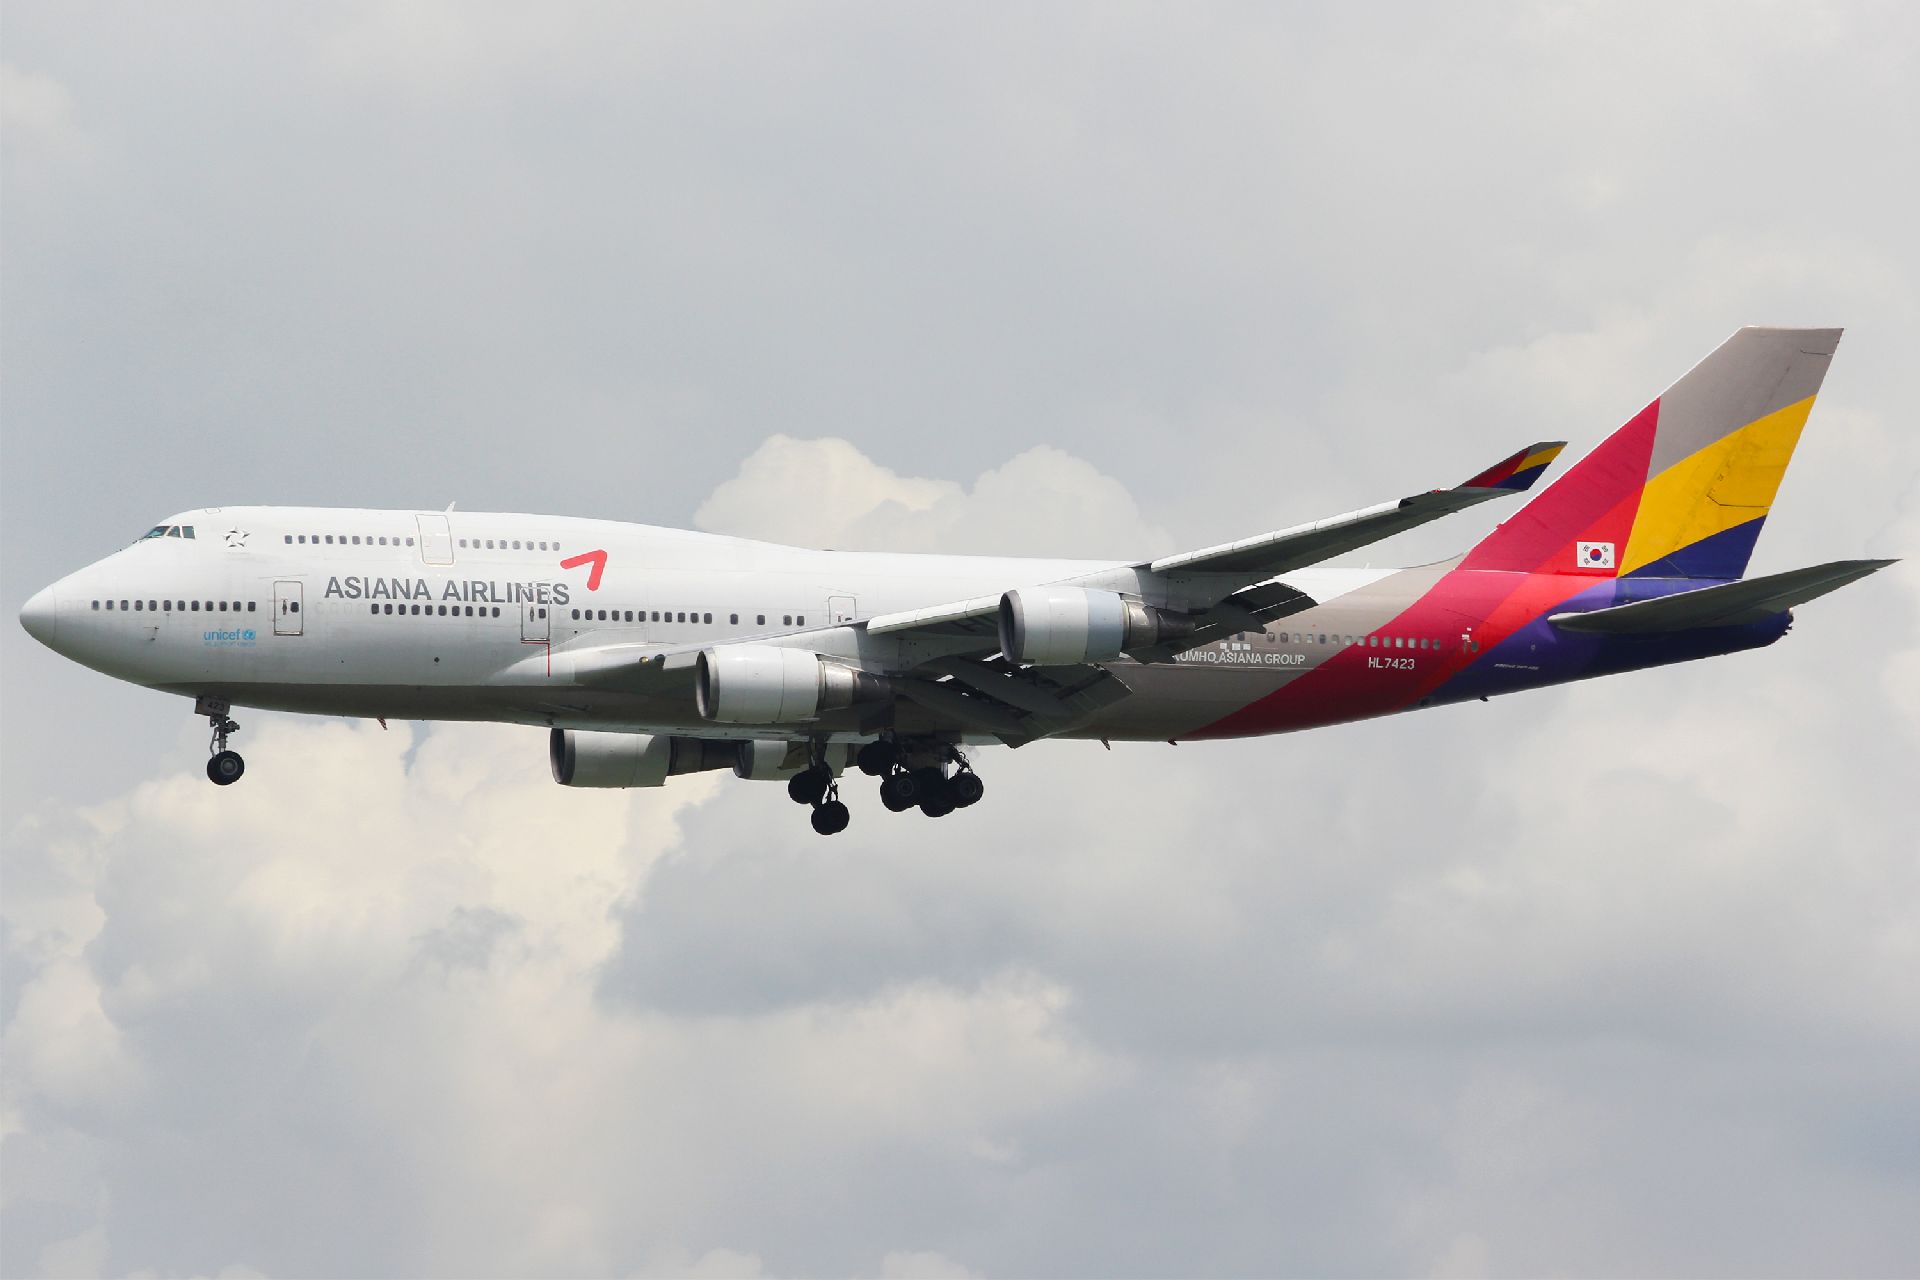 Boeing 747-400 společnosti Asiana Airlines. Foto: Afpwong / Wikimedia Commons